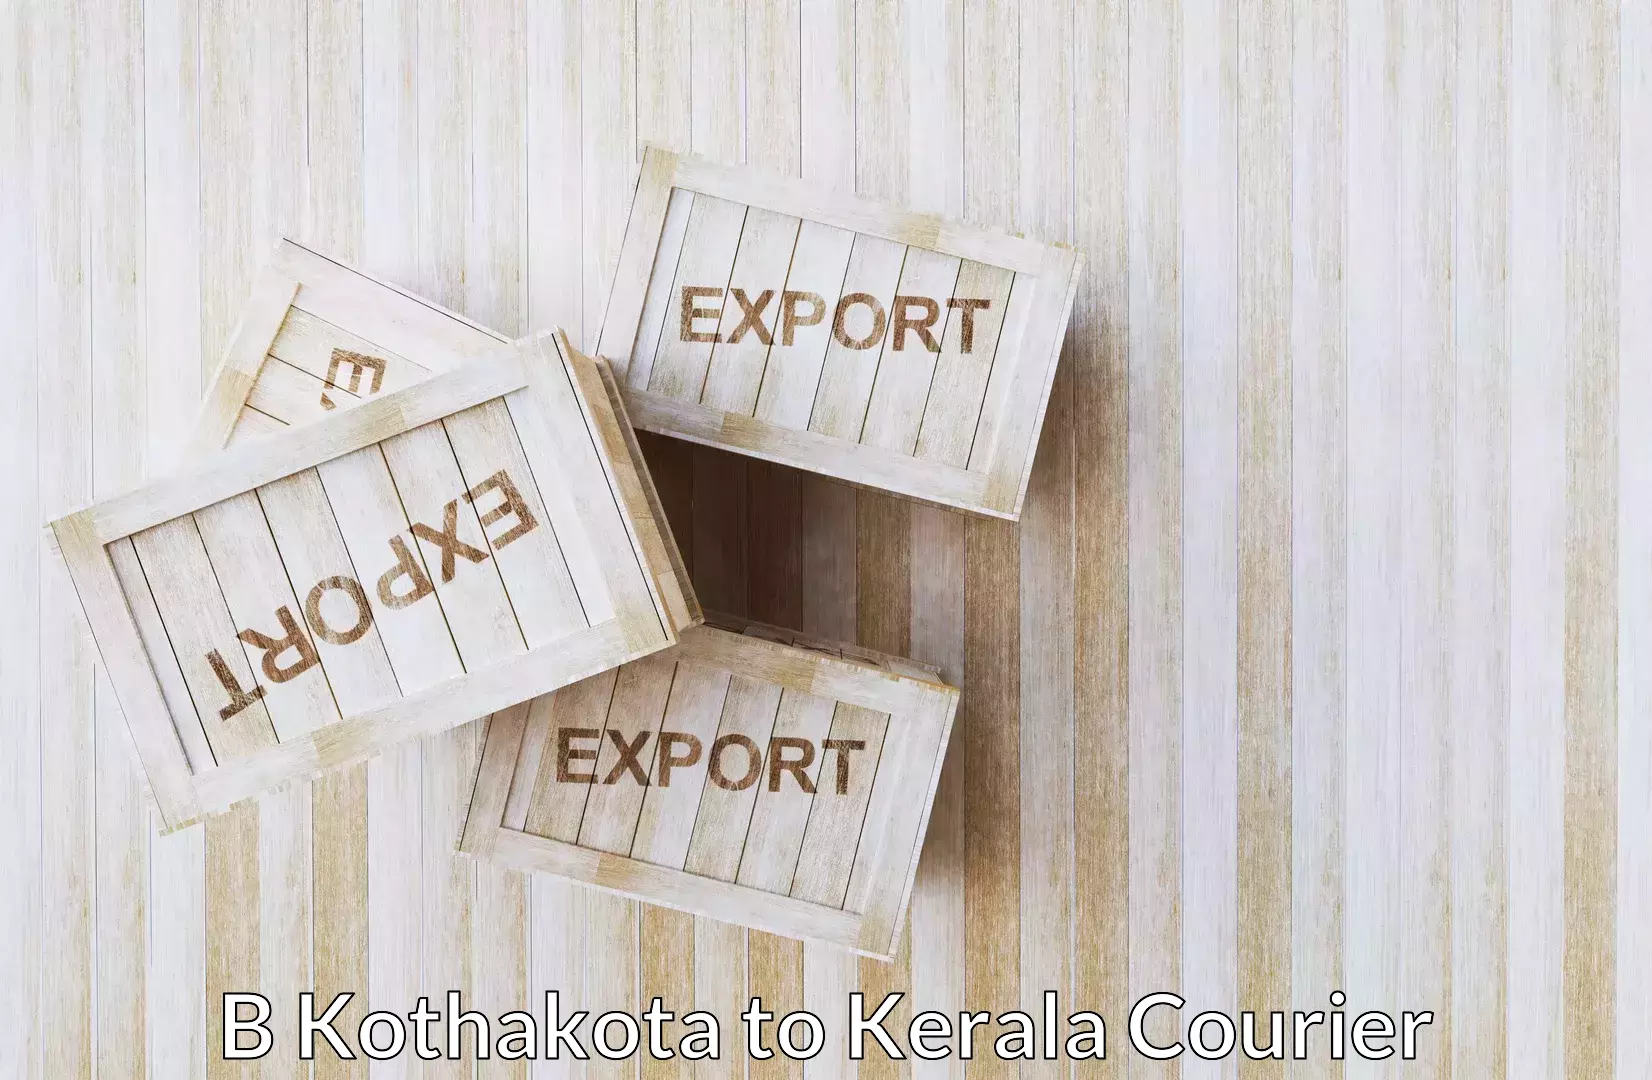 Efficient relocation services B Kothakota to Kerala